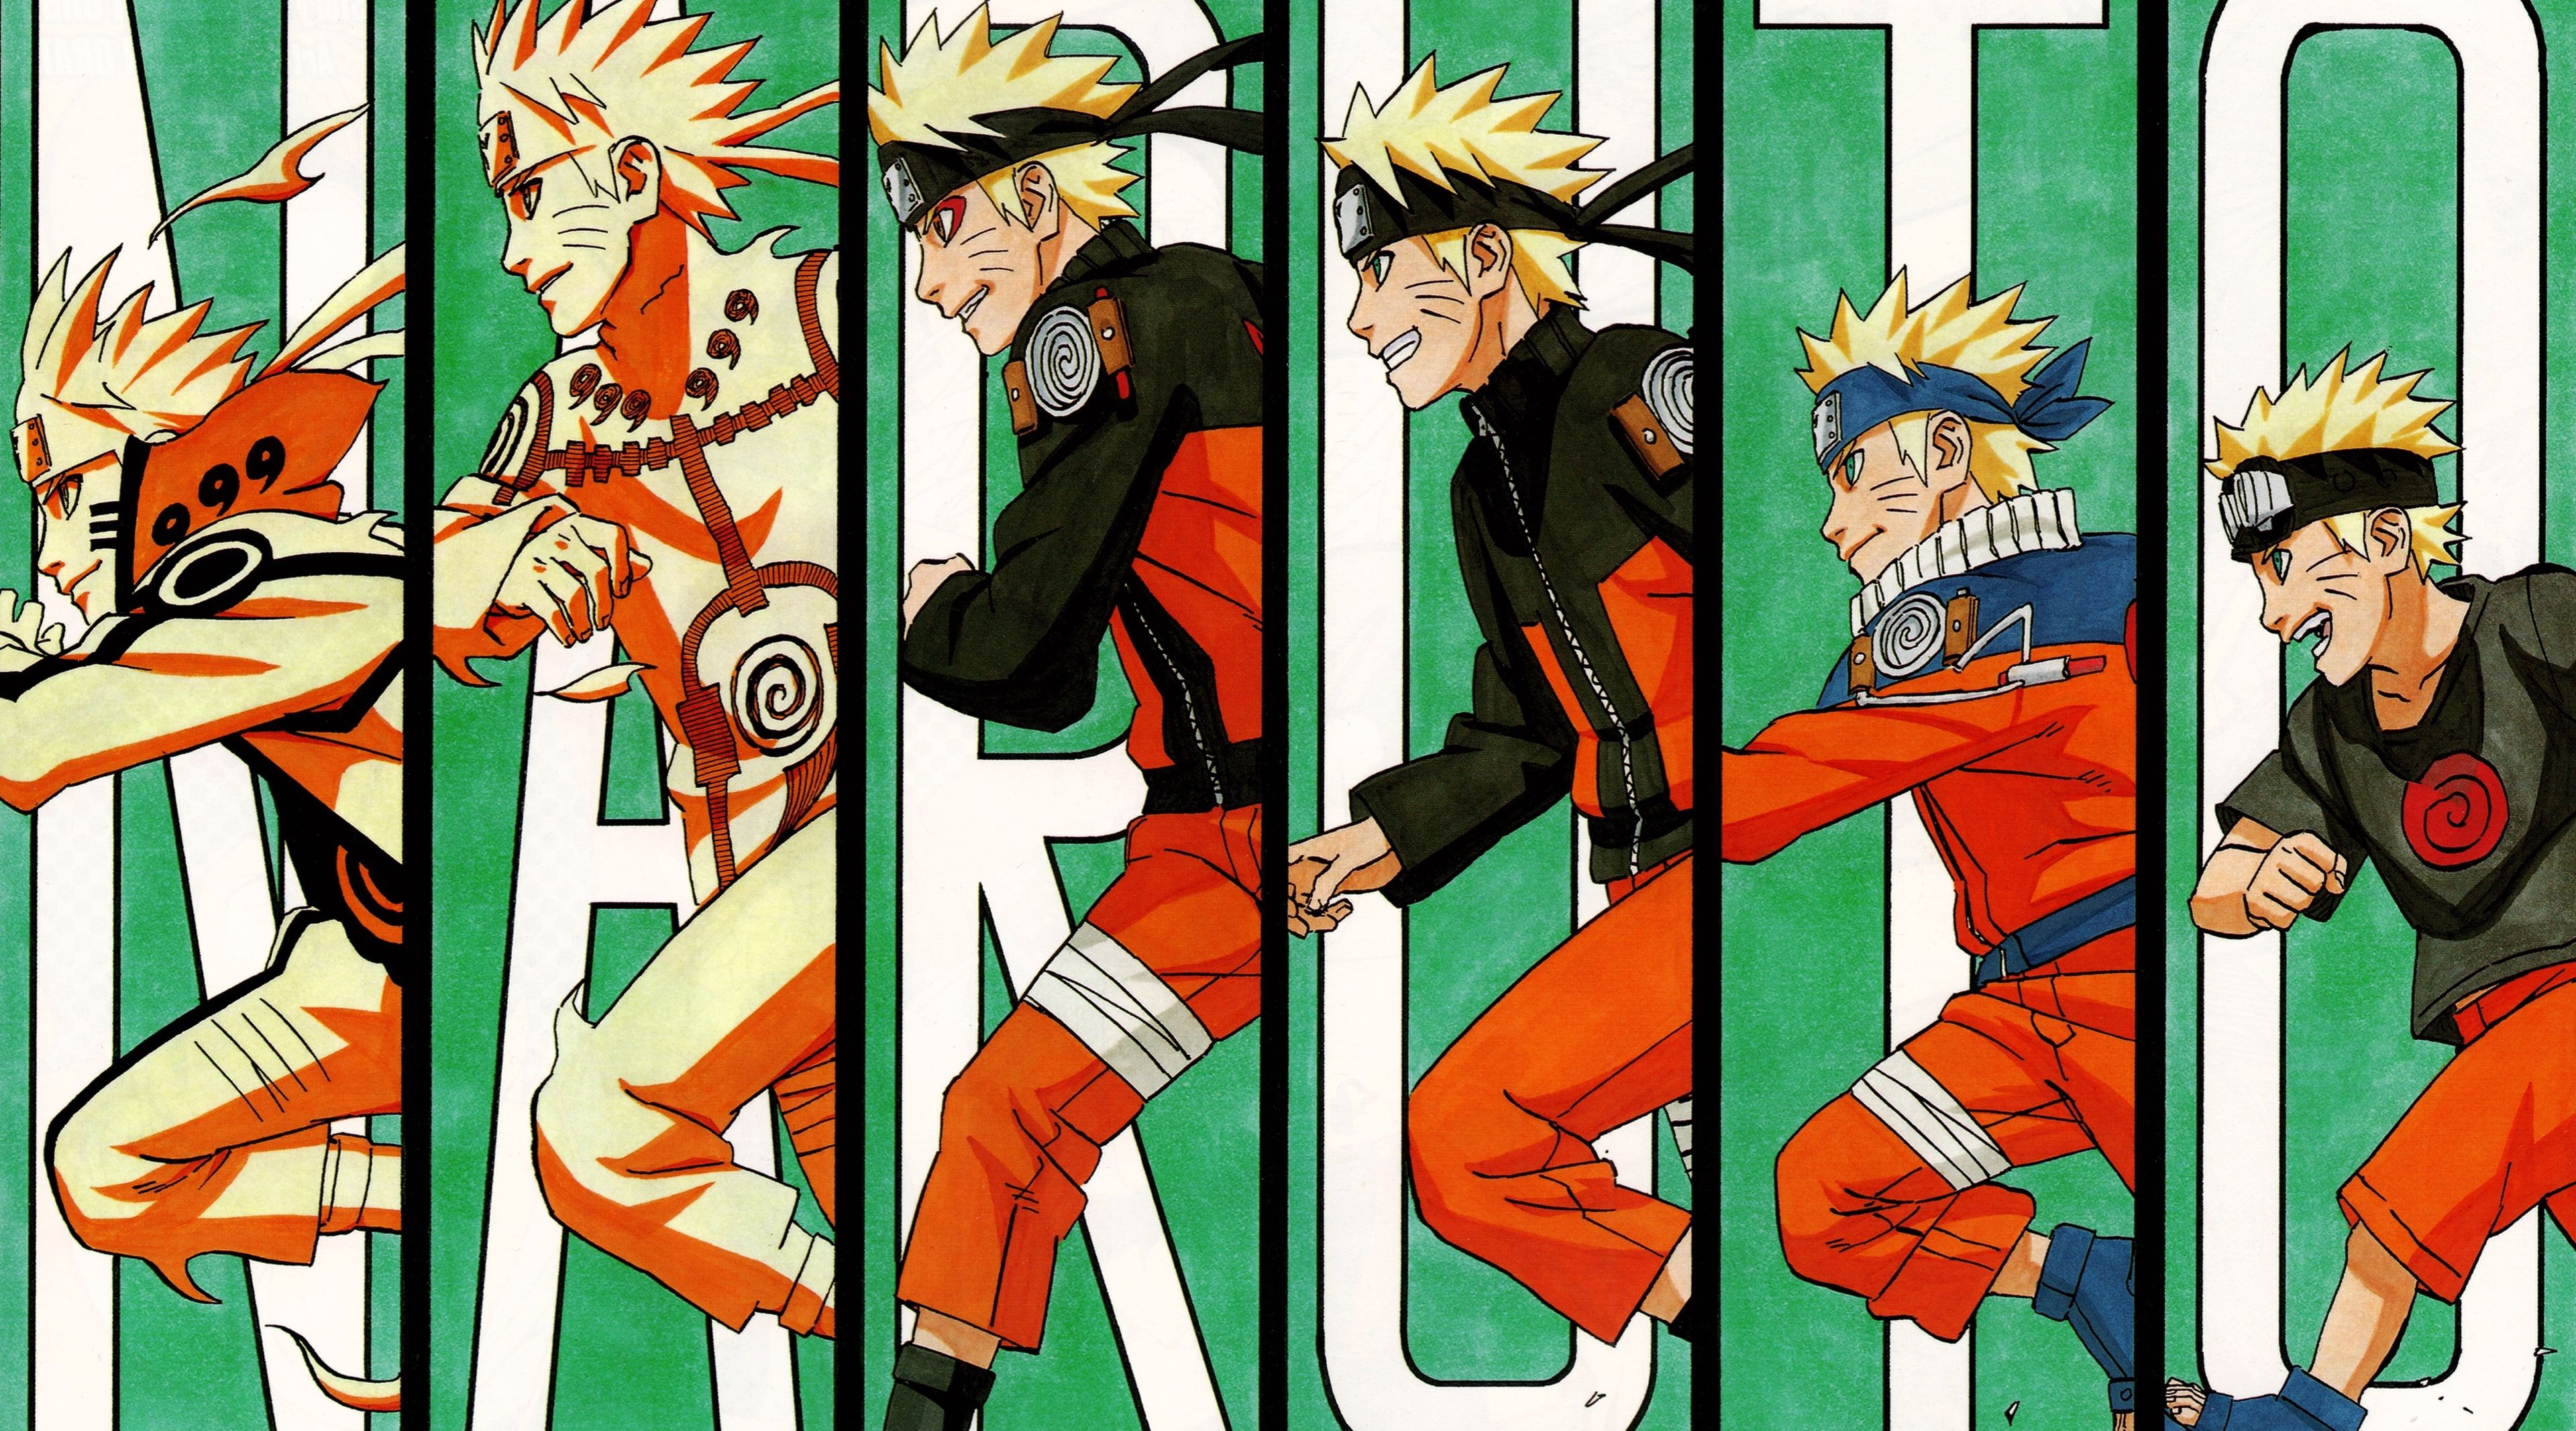 HD wallpaper: Naruto Evolution, Naruto wallpaper, Artistic, Anime, naruto shippuden 4K of Wallpaper for Andriod